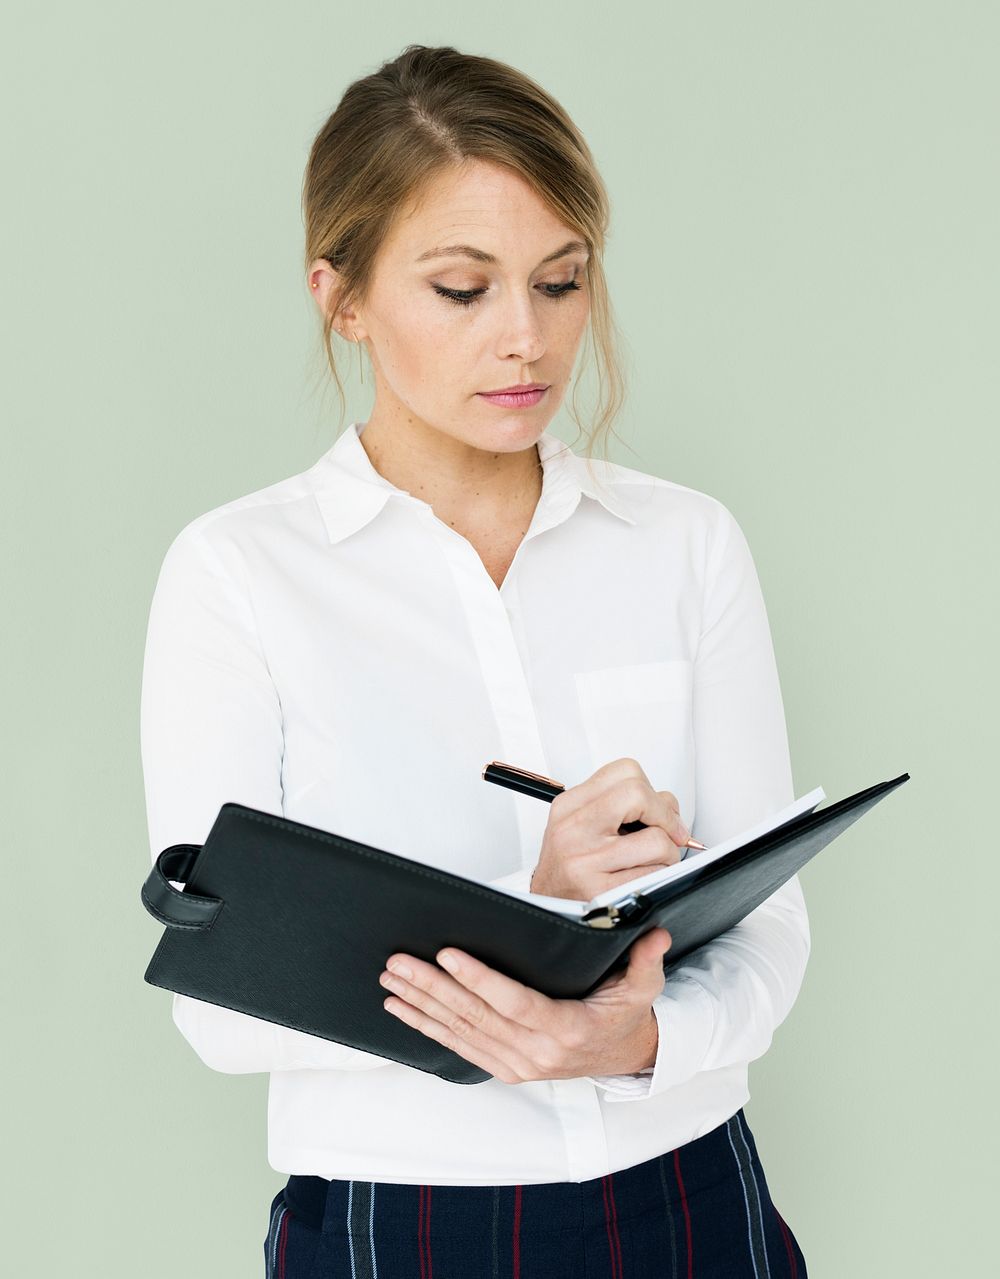 Businesswoman Document Working Portrait Concept